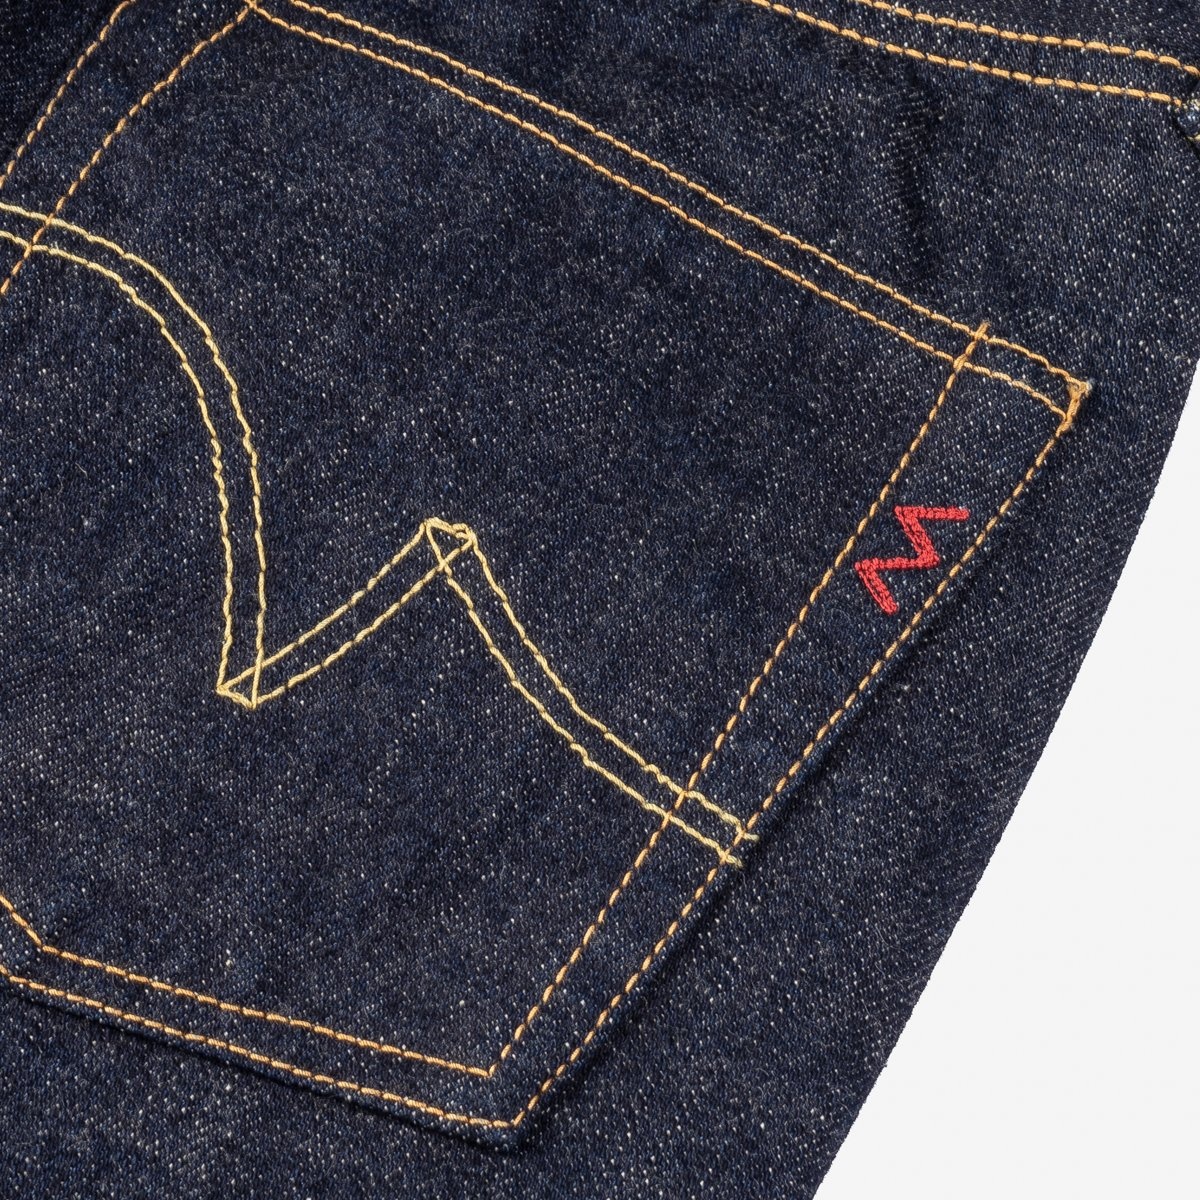 IH-555S-18 18oz Vintage Selvedge Denim Super Slim Cut Jeans - Indigo - 13